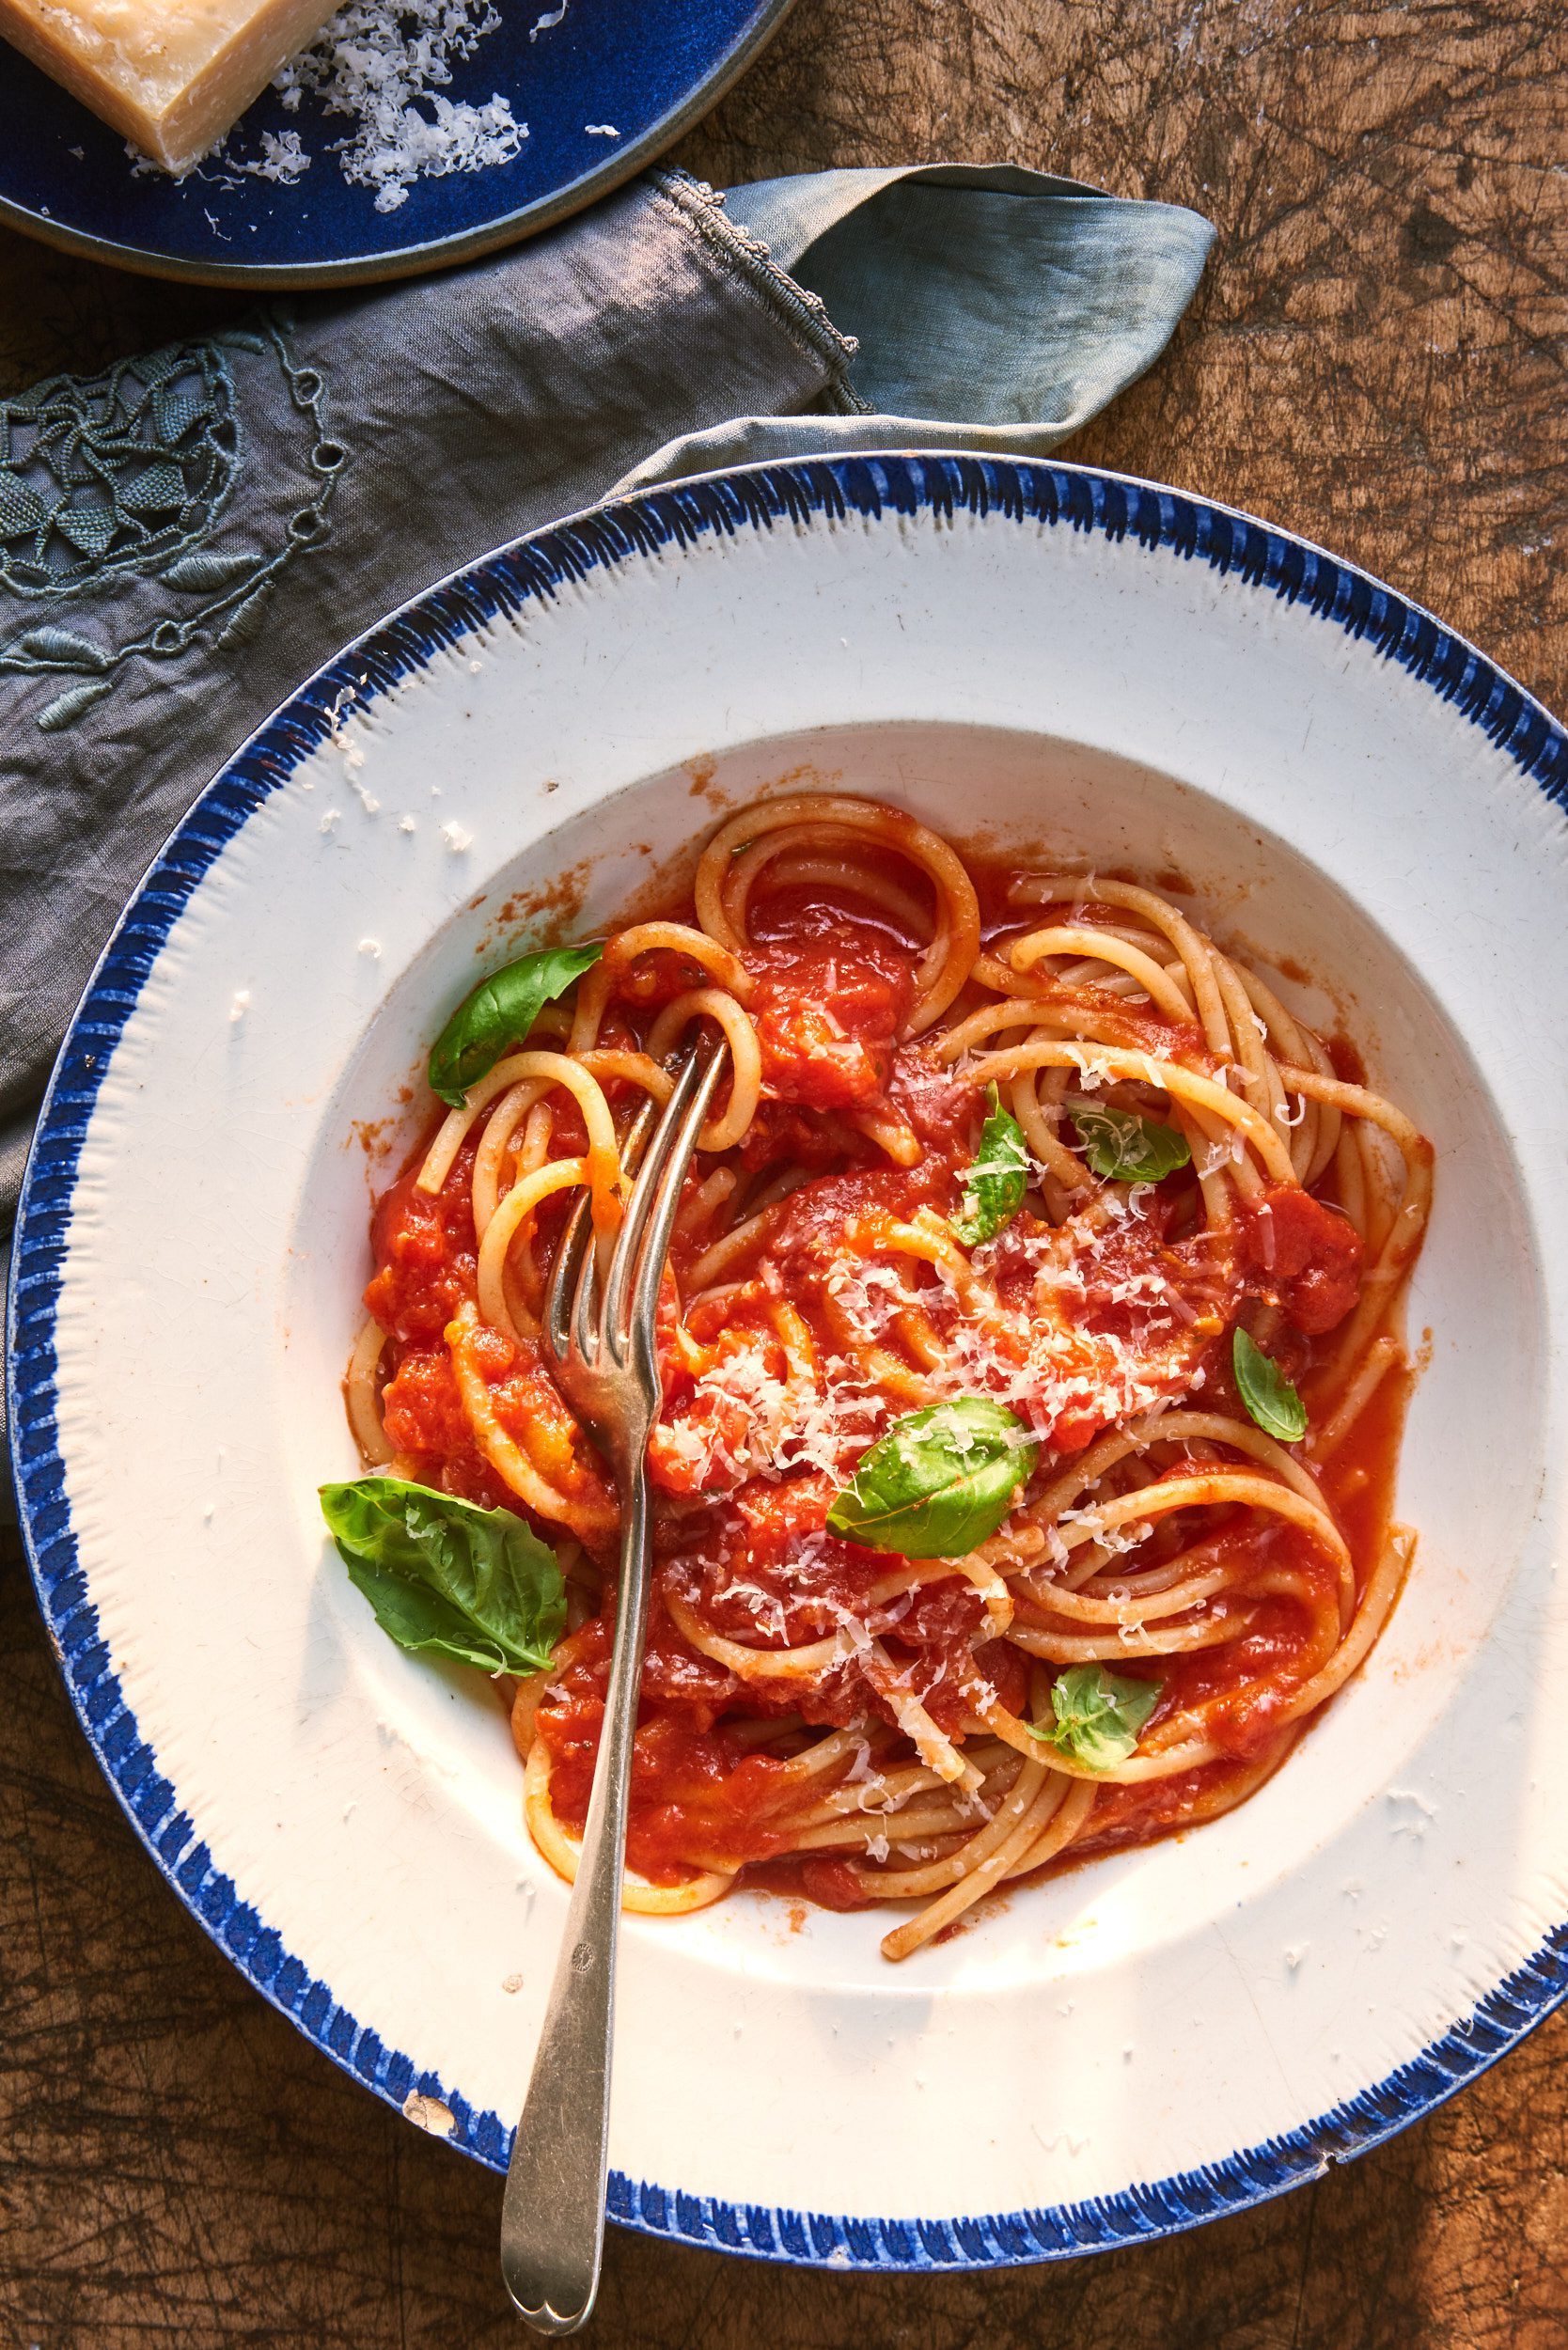 https://www.theclevercarrot.com/wp-content/uploads/2022/01/Spaghetti-wTomato-Sauce-1.jpg